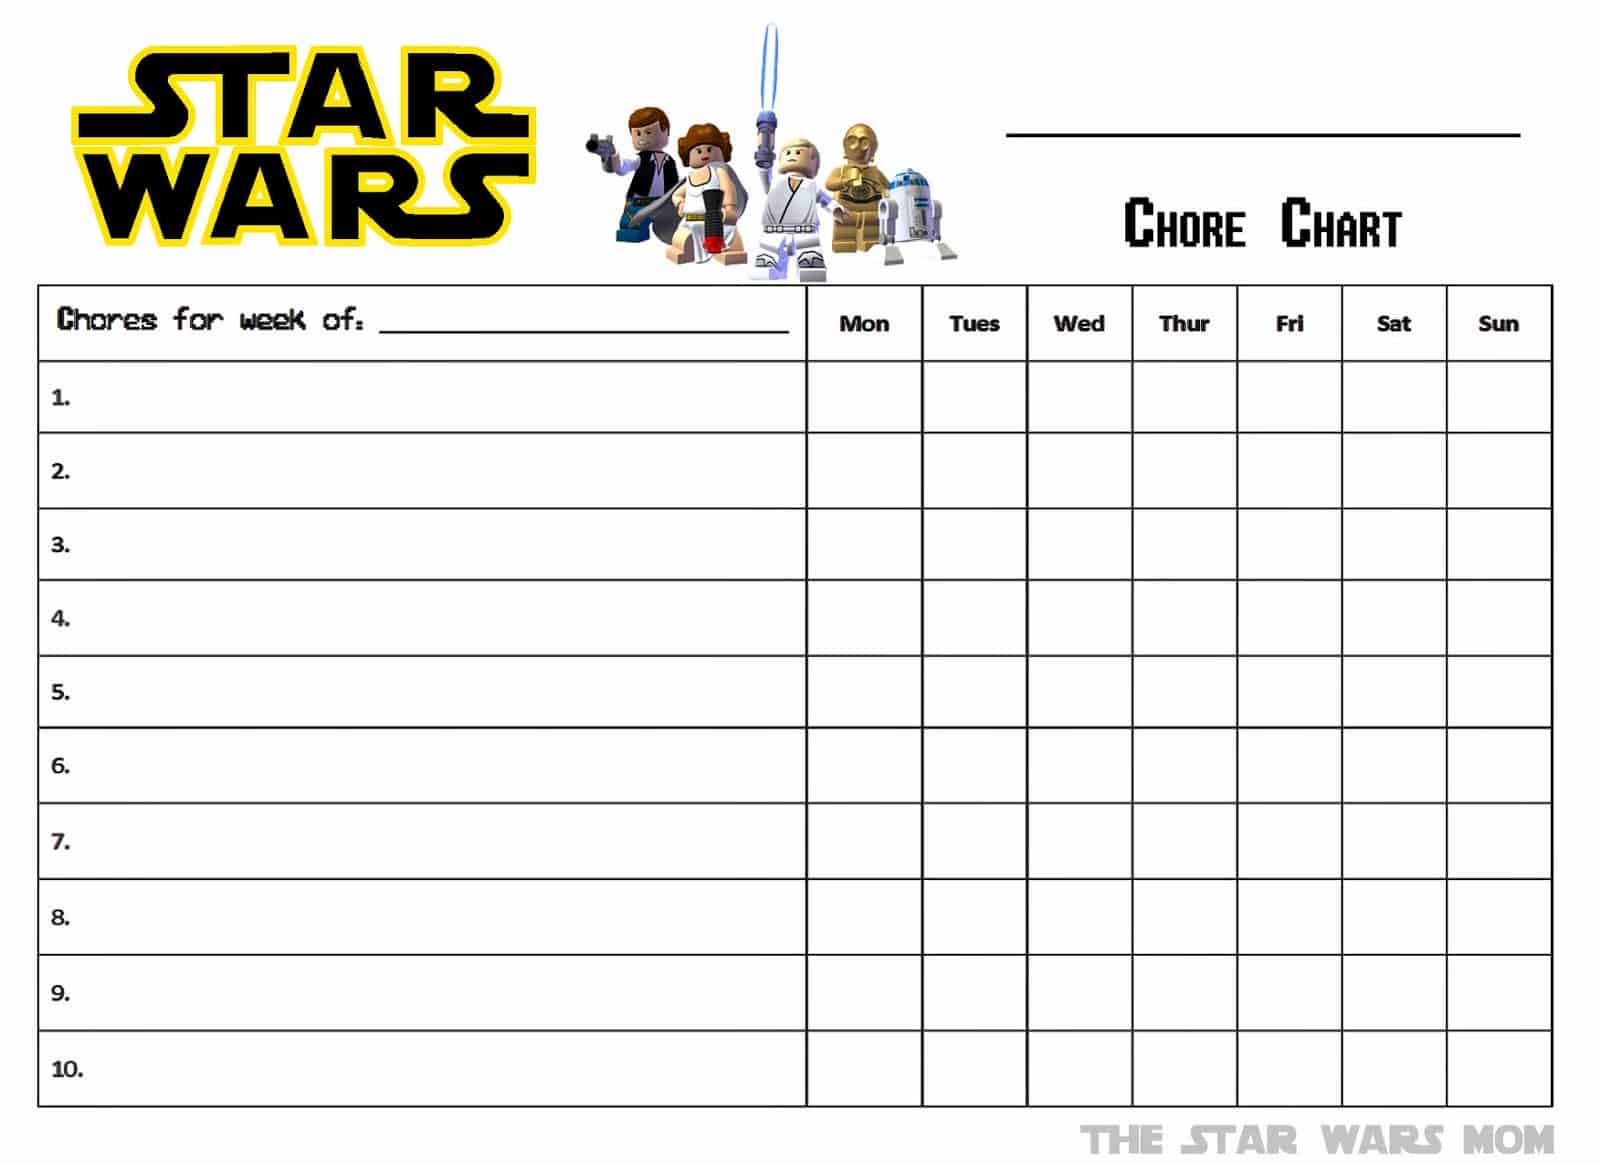 Star wars chore chart